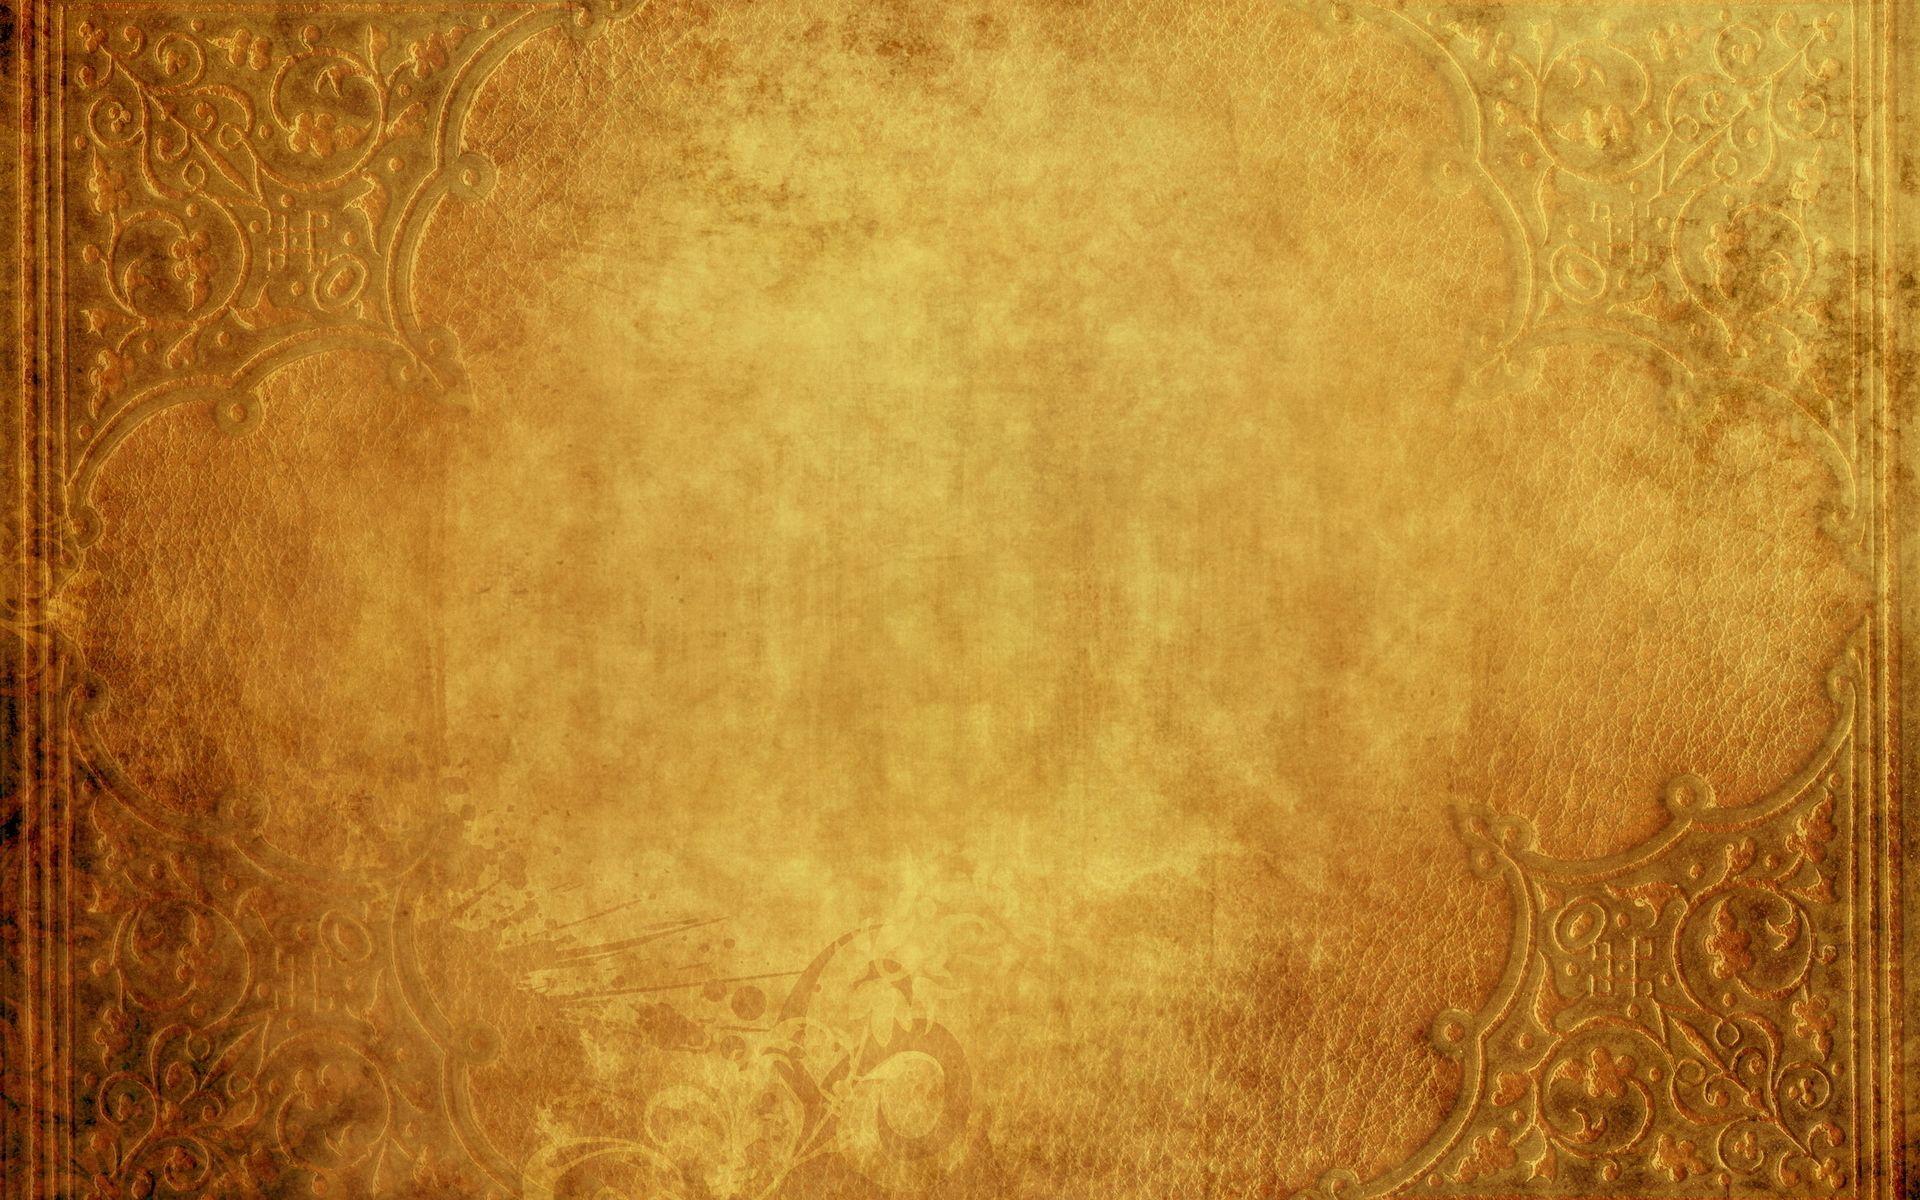 Gold Background Image. GOLDEN BACKGROUNDS